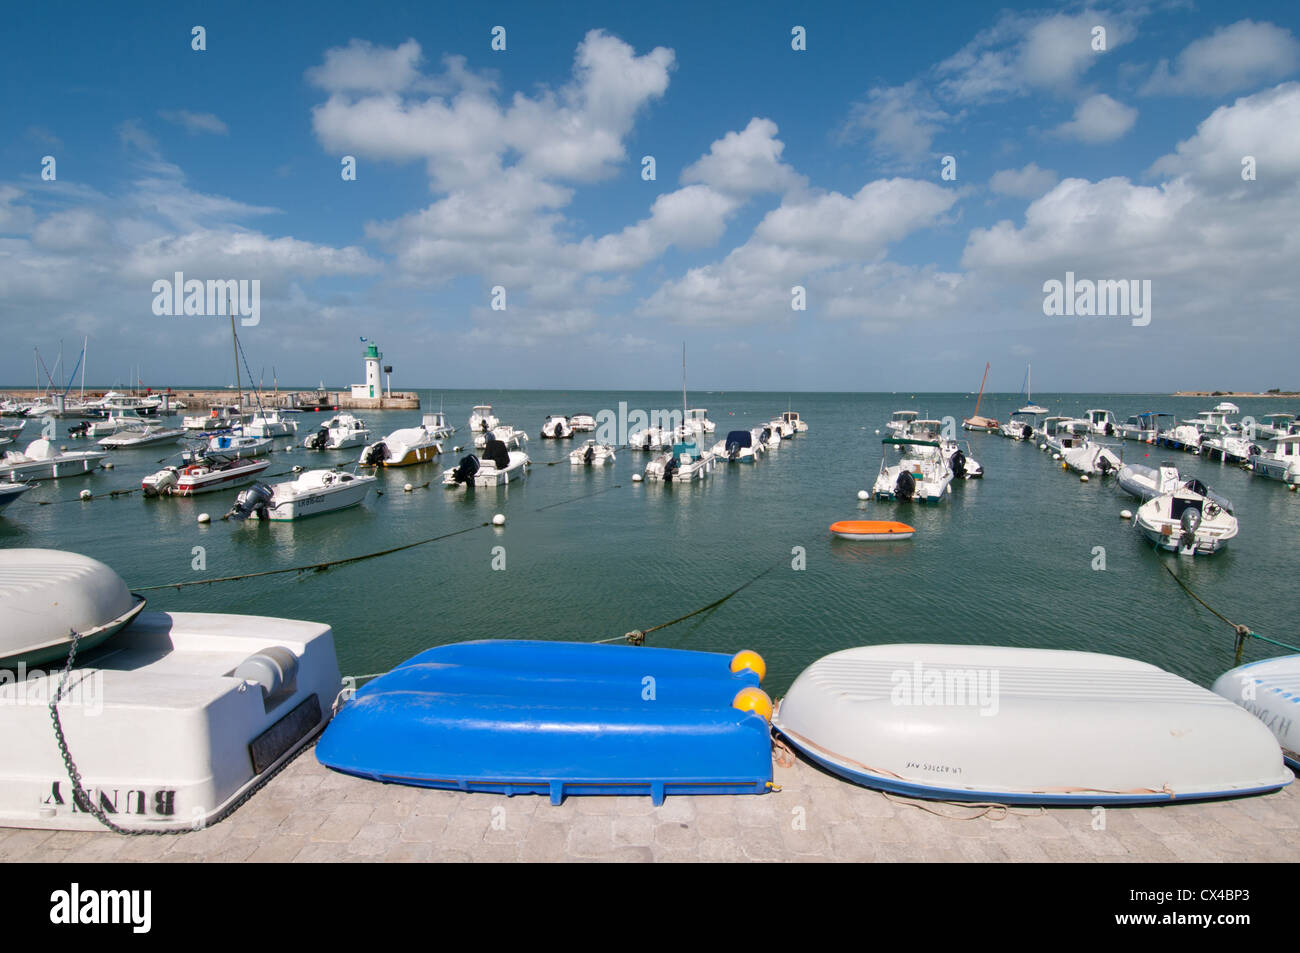 La graziosa località balneare di La flotte, Île de Ré, Charente-Maritime, Poitou-Charentes, Francia. Foto Stock